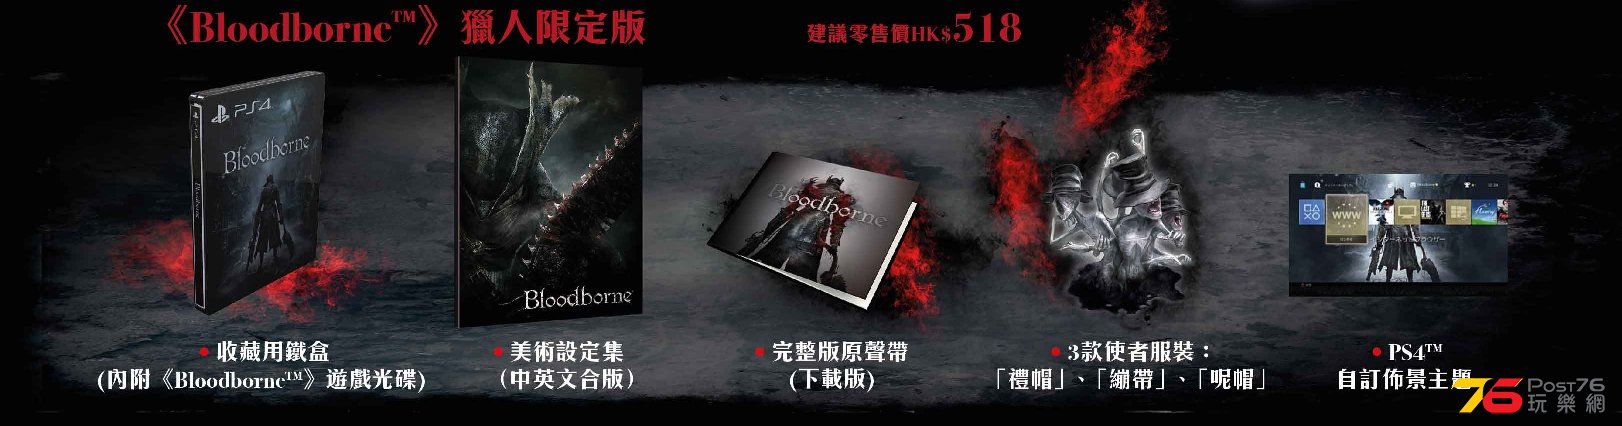 Bloodborne Hunter Edition_contents.jpg